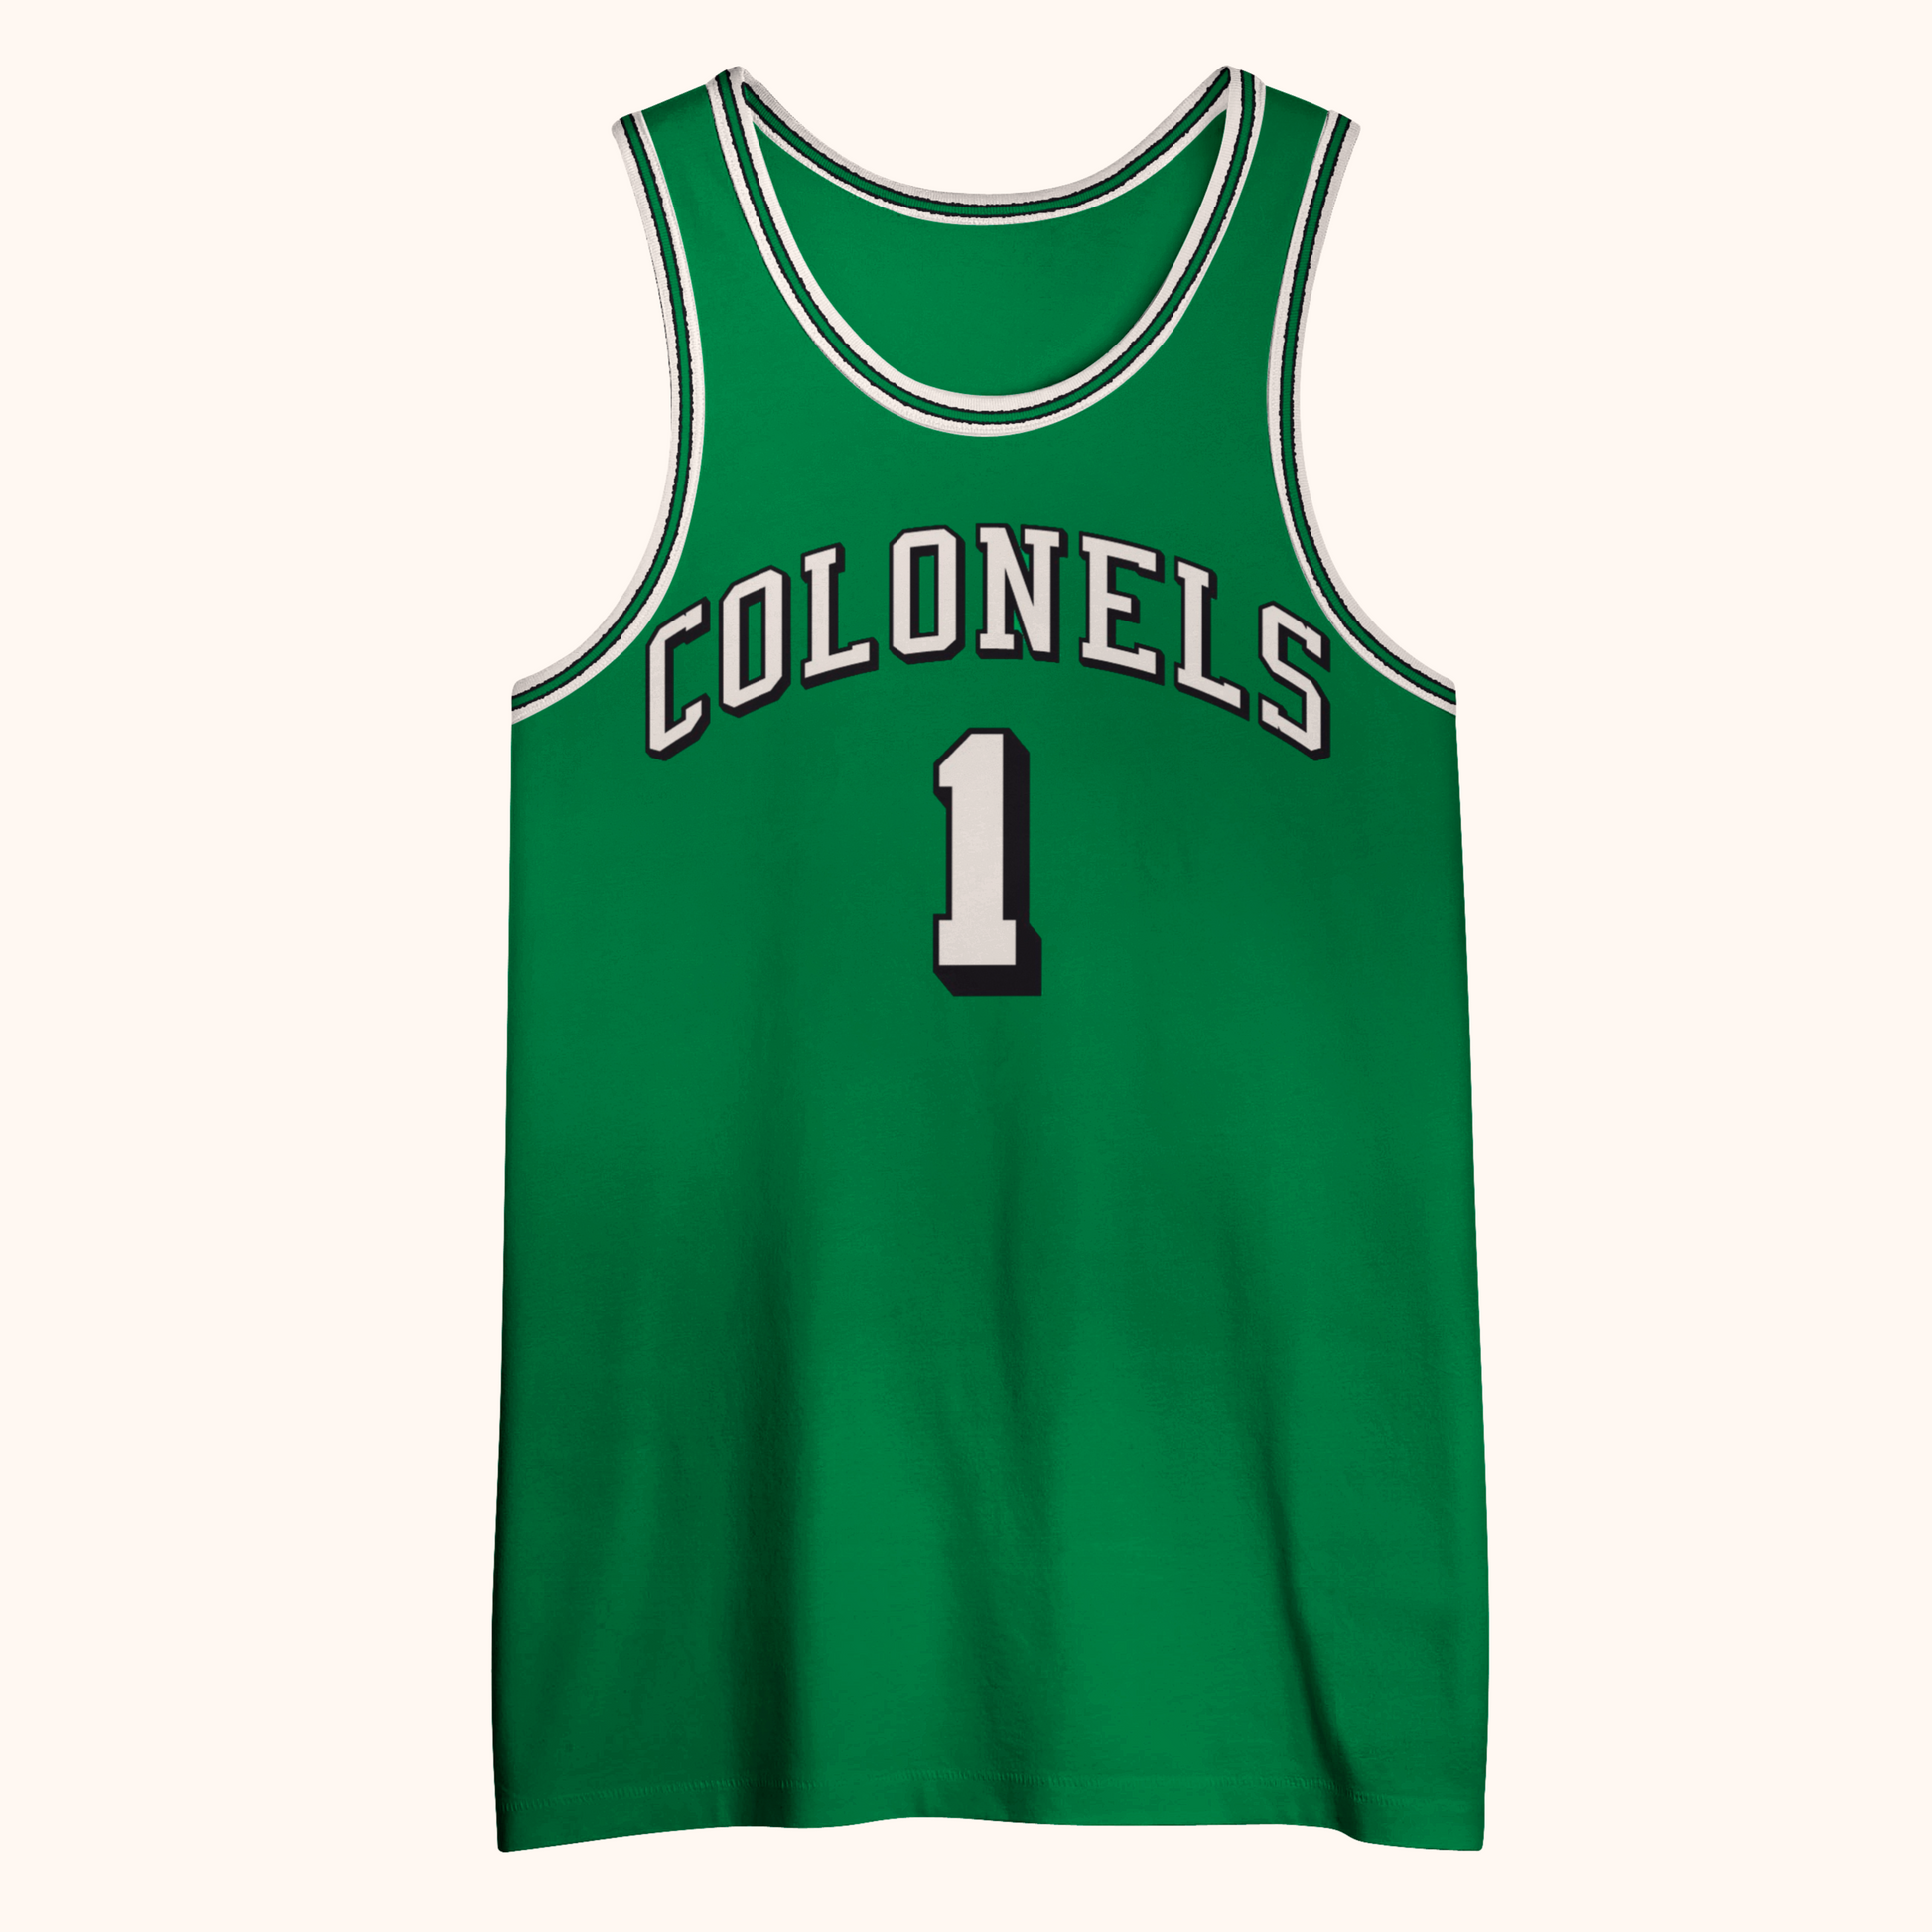 Boston Basketball Jersey - Green - Medium - Royal Retros